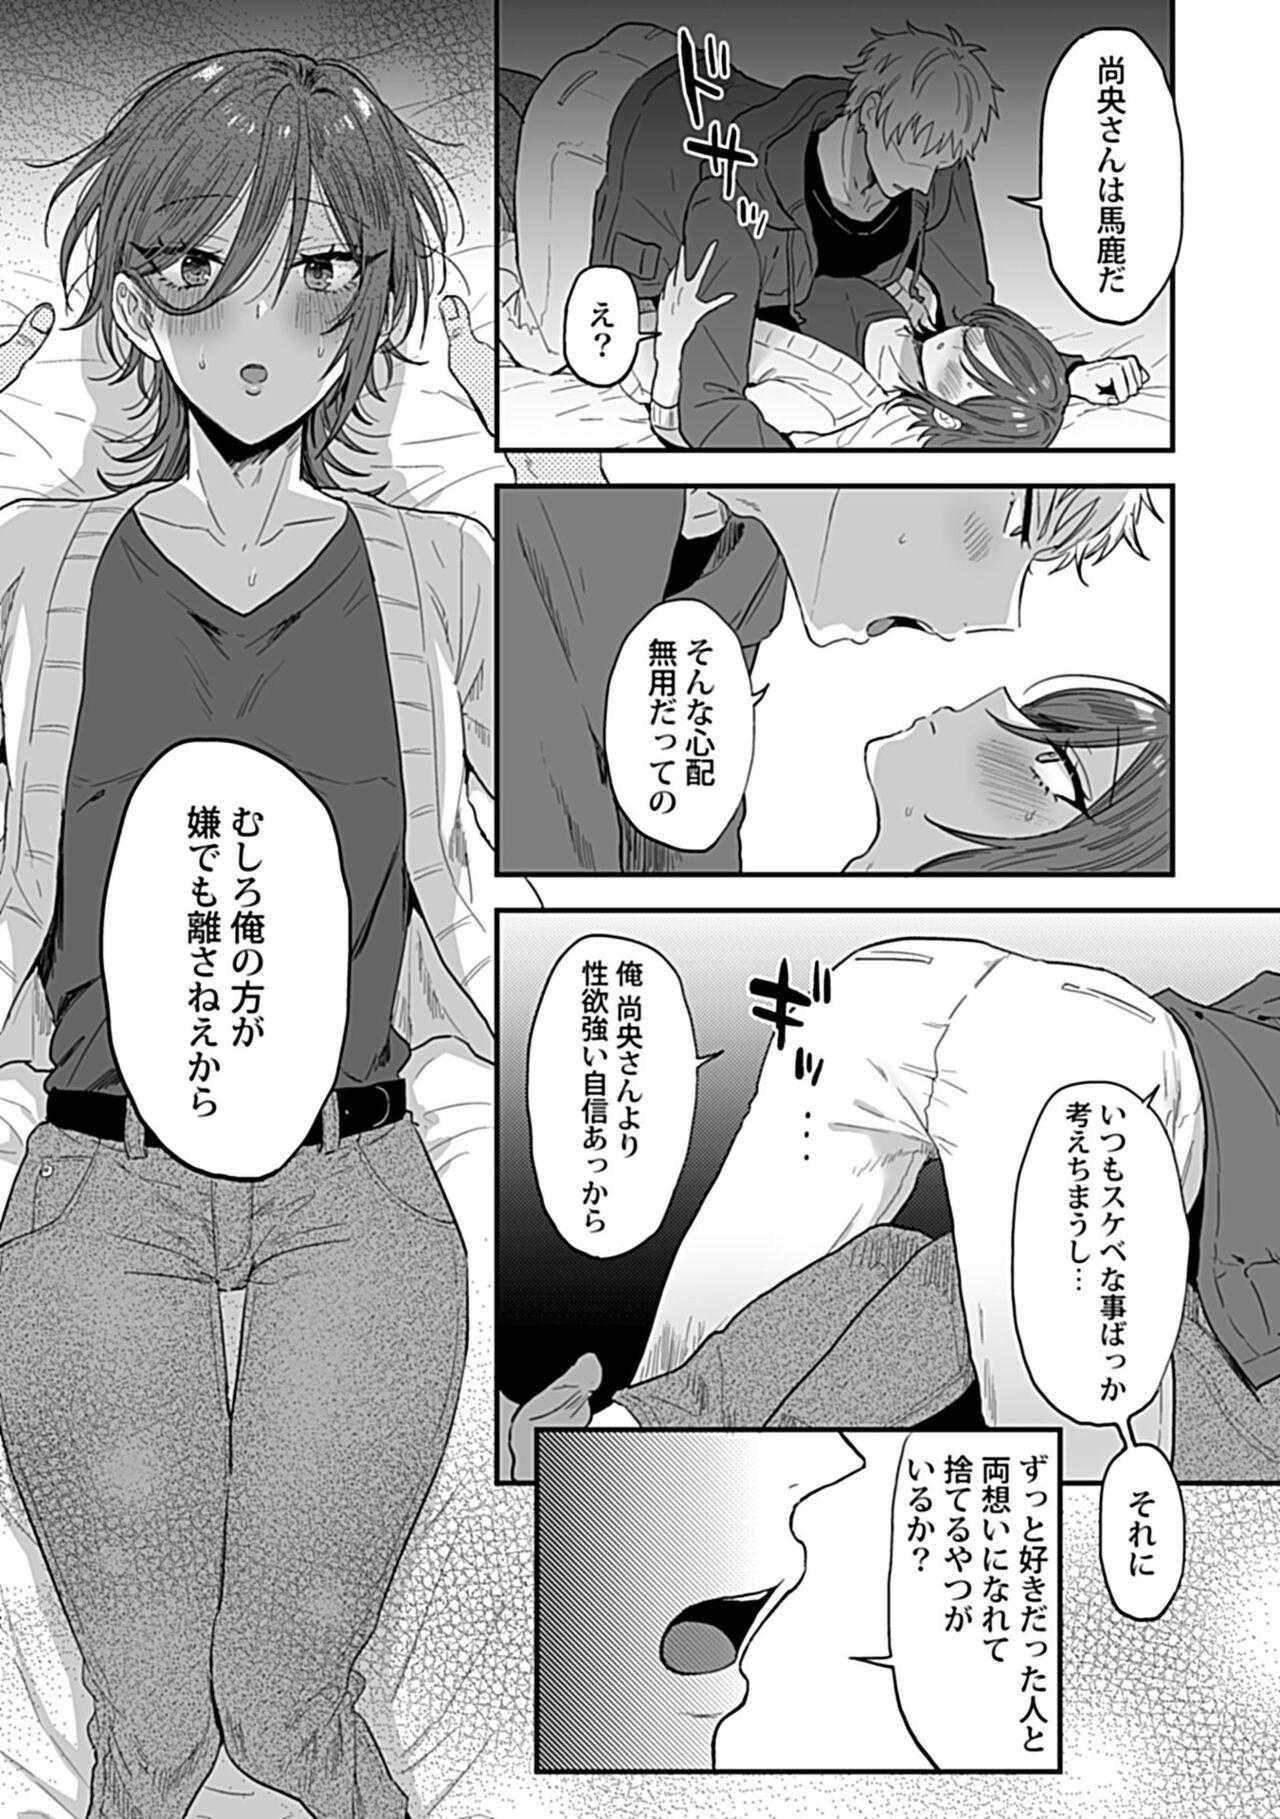 [Ainaryumu] Tonari no Ecchi na Onii-san. 2 [R18 Ban] - The sexy boy who lives in the next! 16